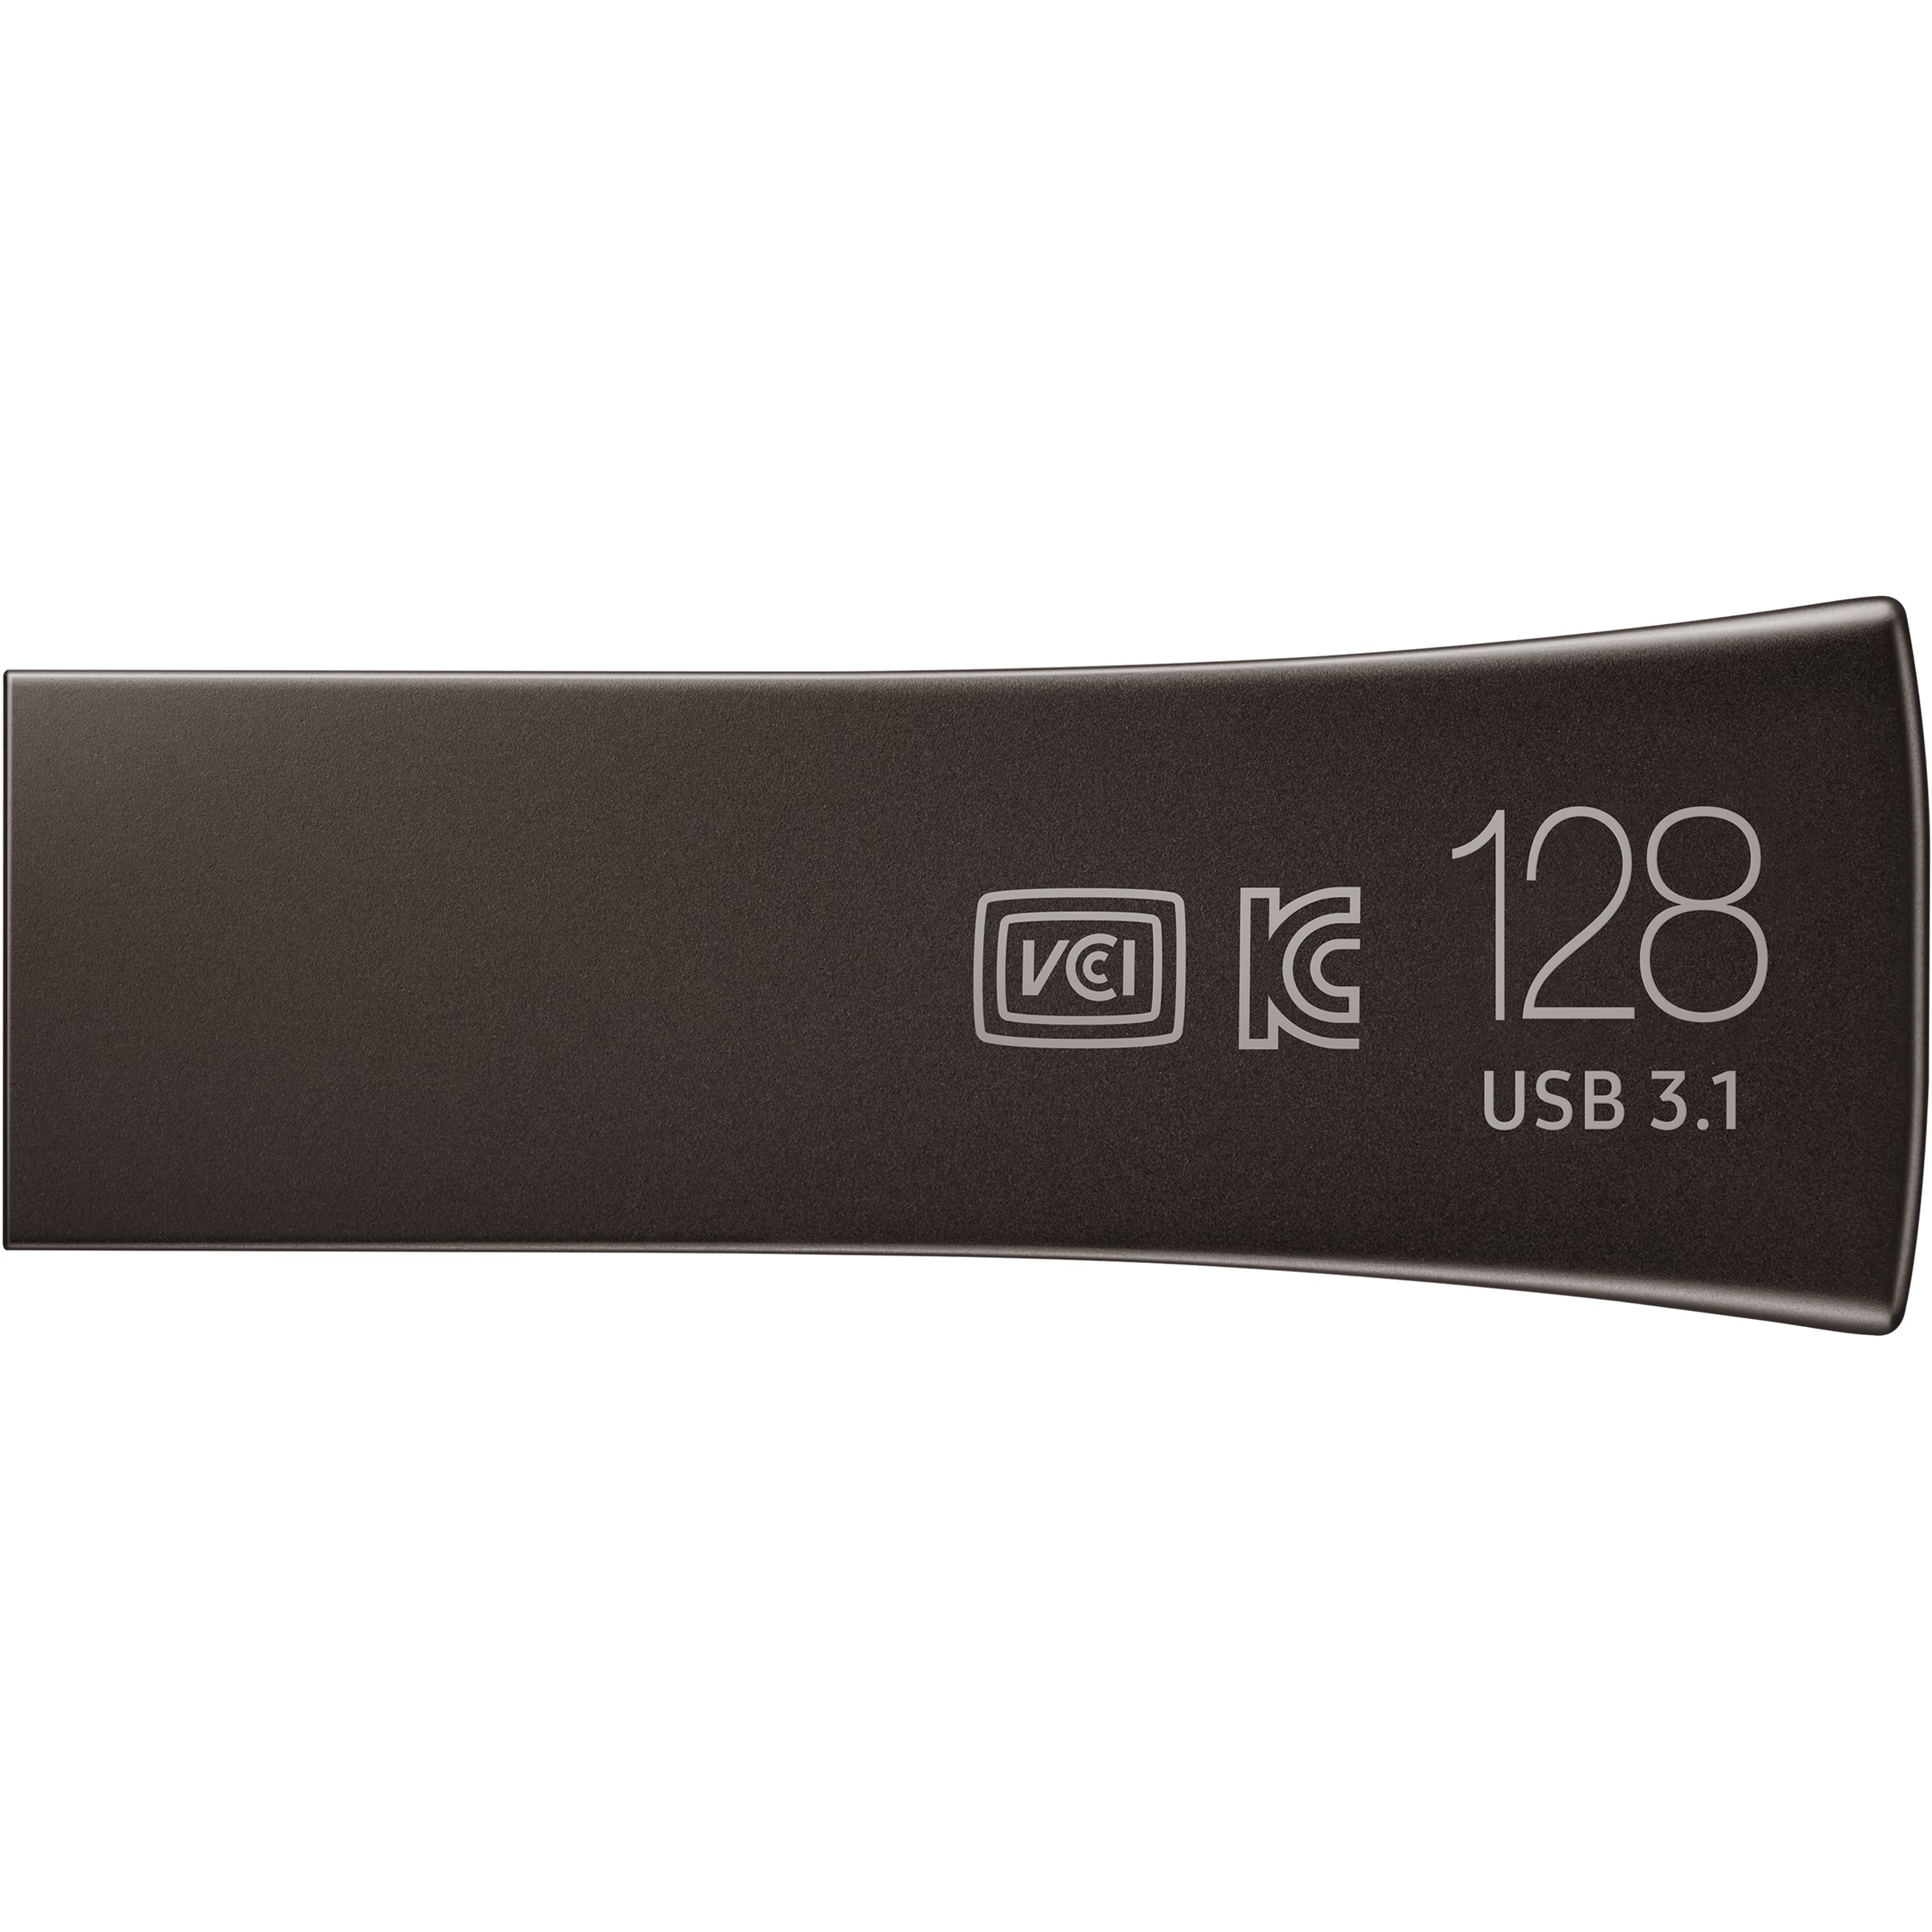 SAMSUNG MUF-128BE4/APC, USB-Stick, Samsung MUF-128BE USB  (BILD2)